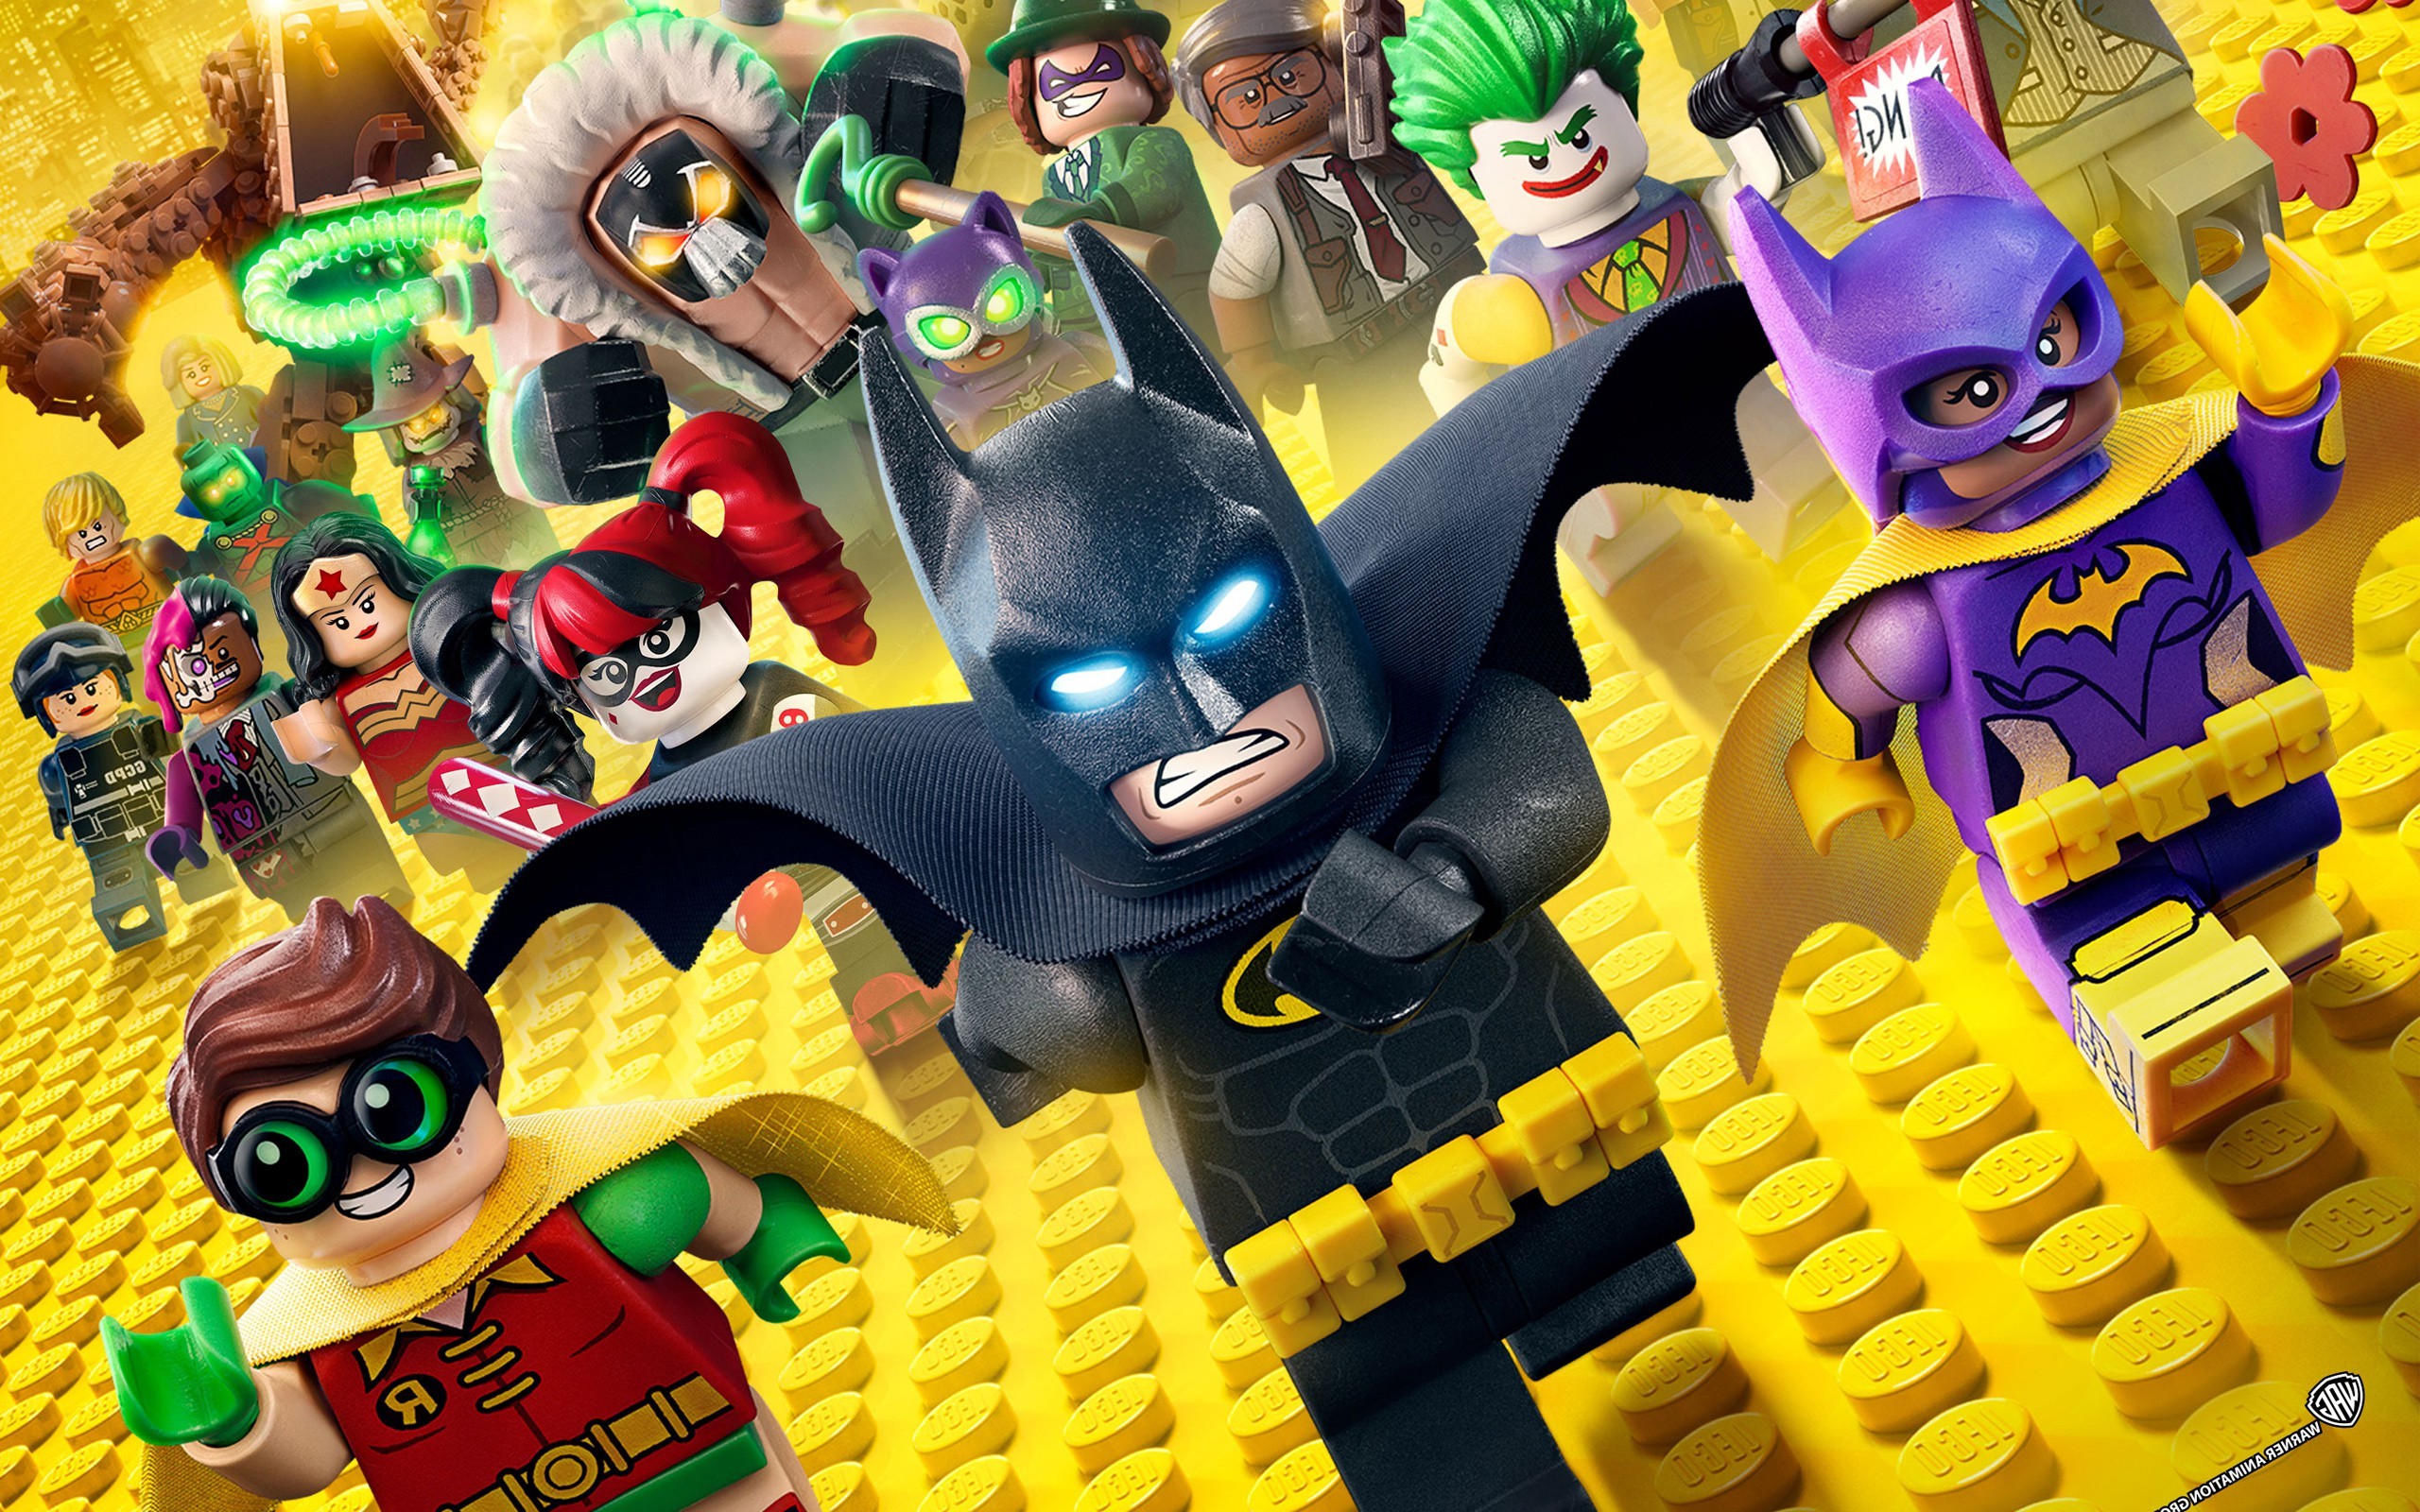 The Lego Batman Movie Wallpaper